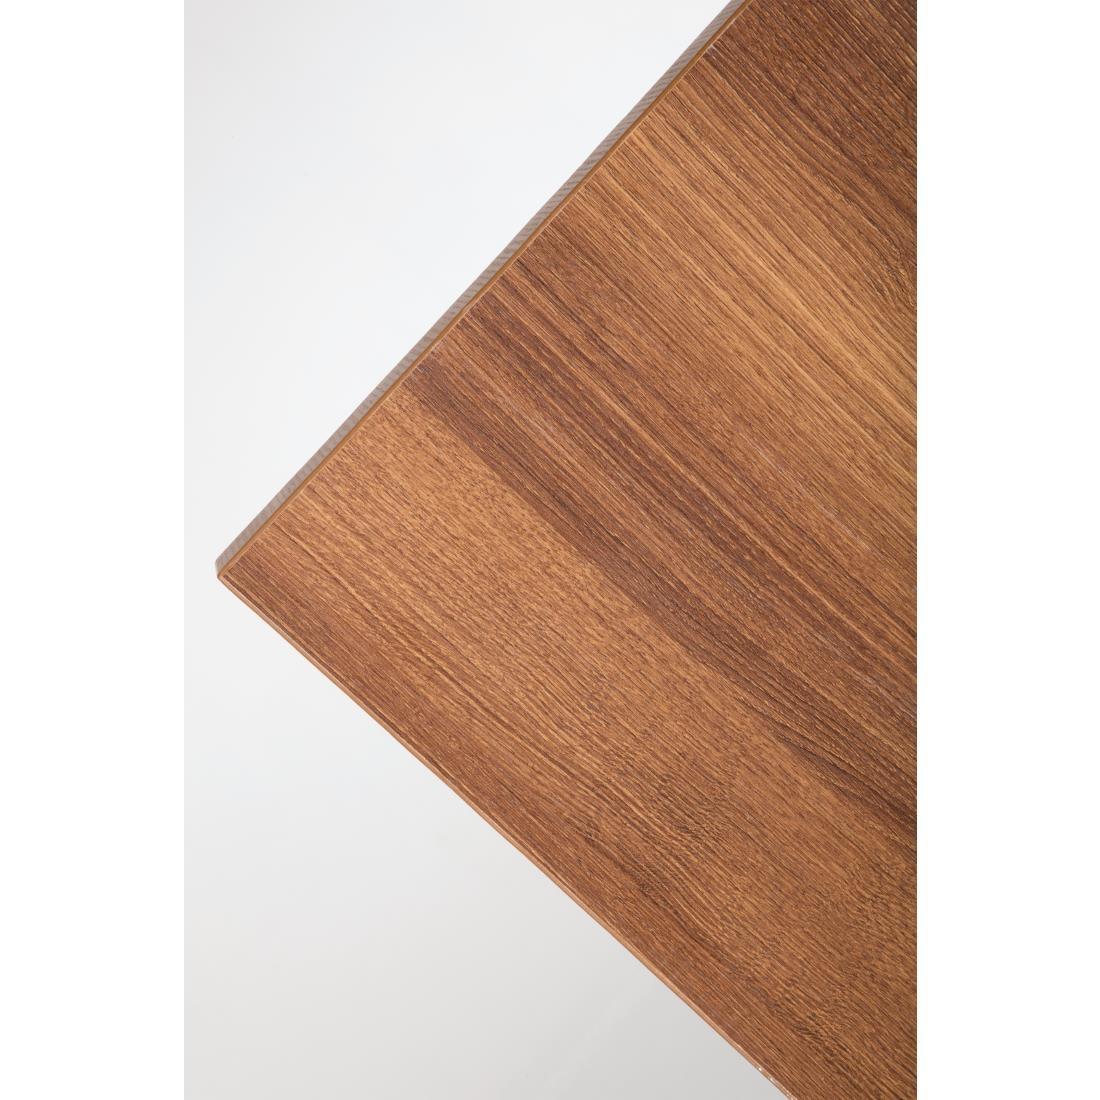 Bolero Pre-drilled Rectangular Table Top Rustic Oak 1100(W) x 700(D)mm - DT442  - 5